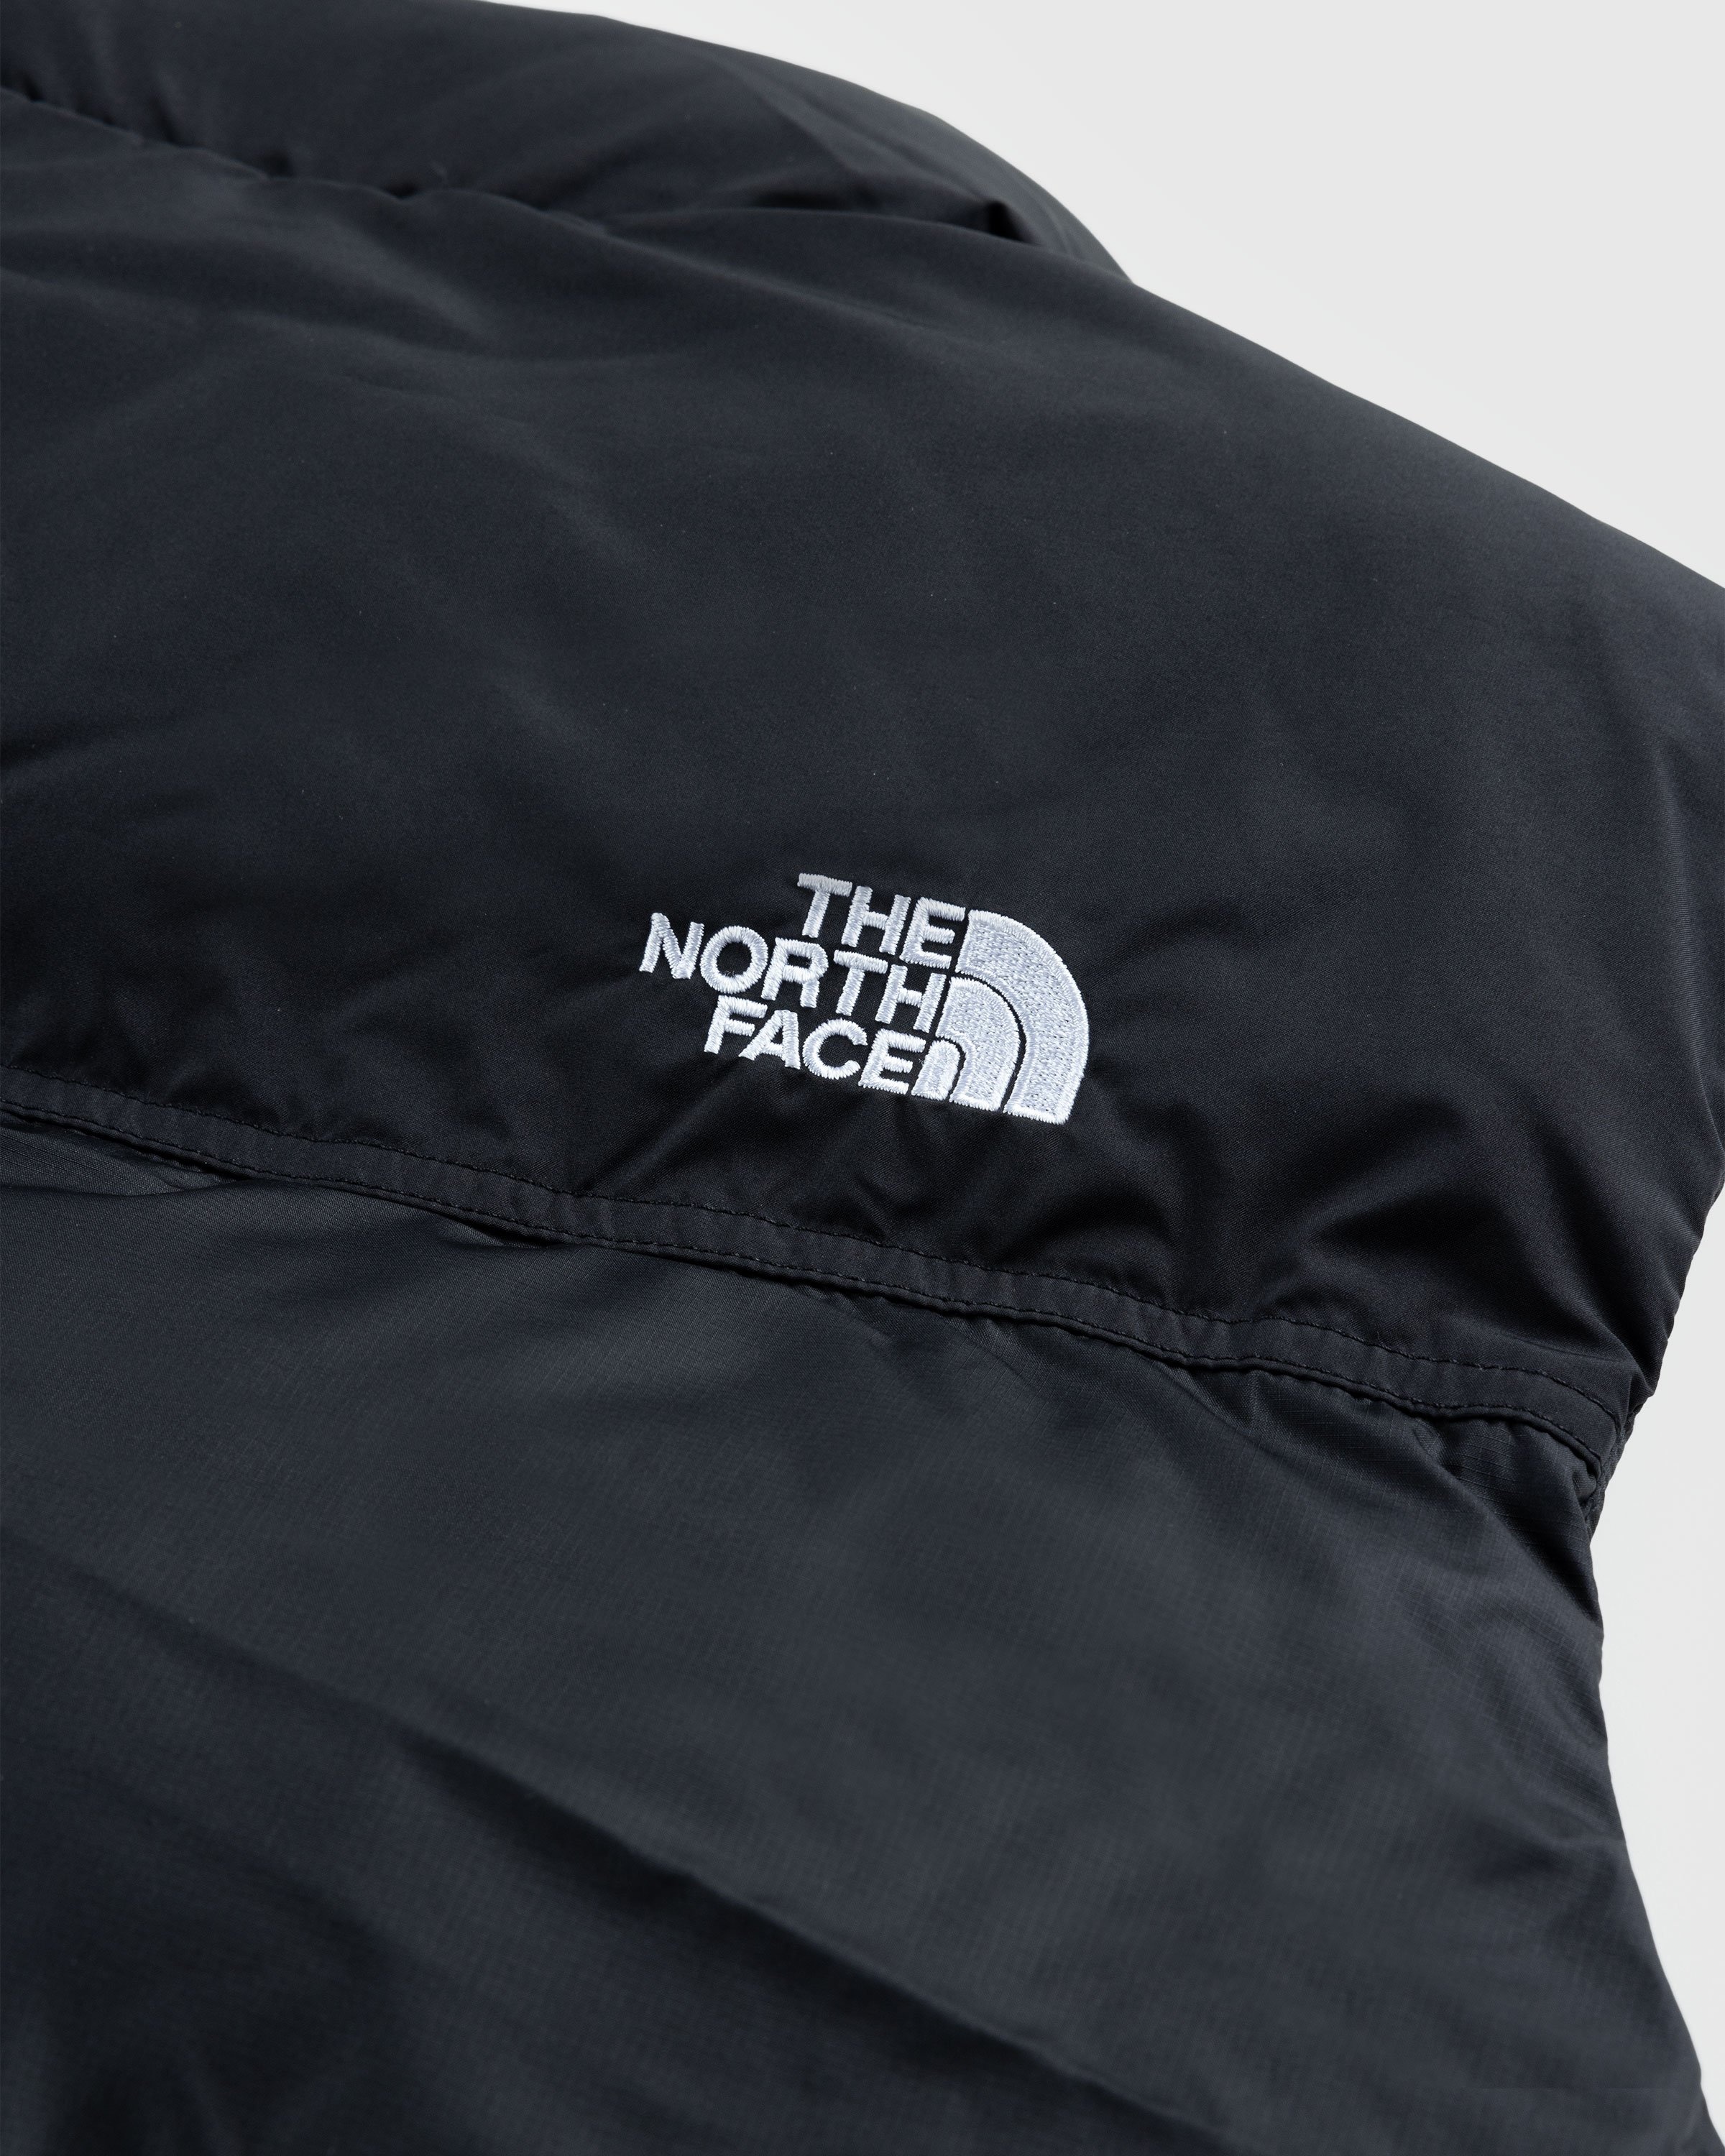 The North Face – Saikuru Vest TNF Black - Outerwear - Black - Image 7